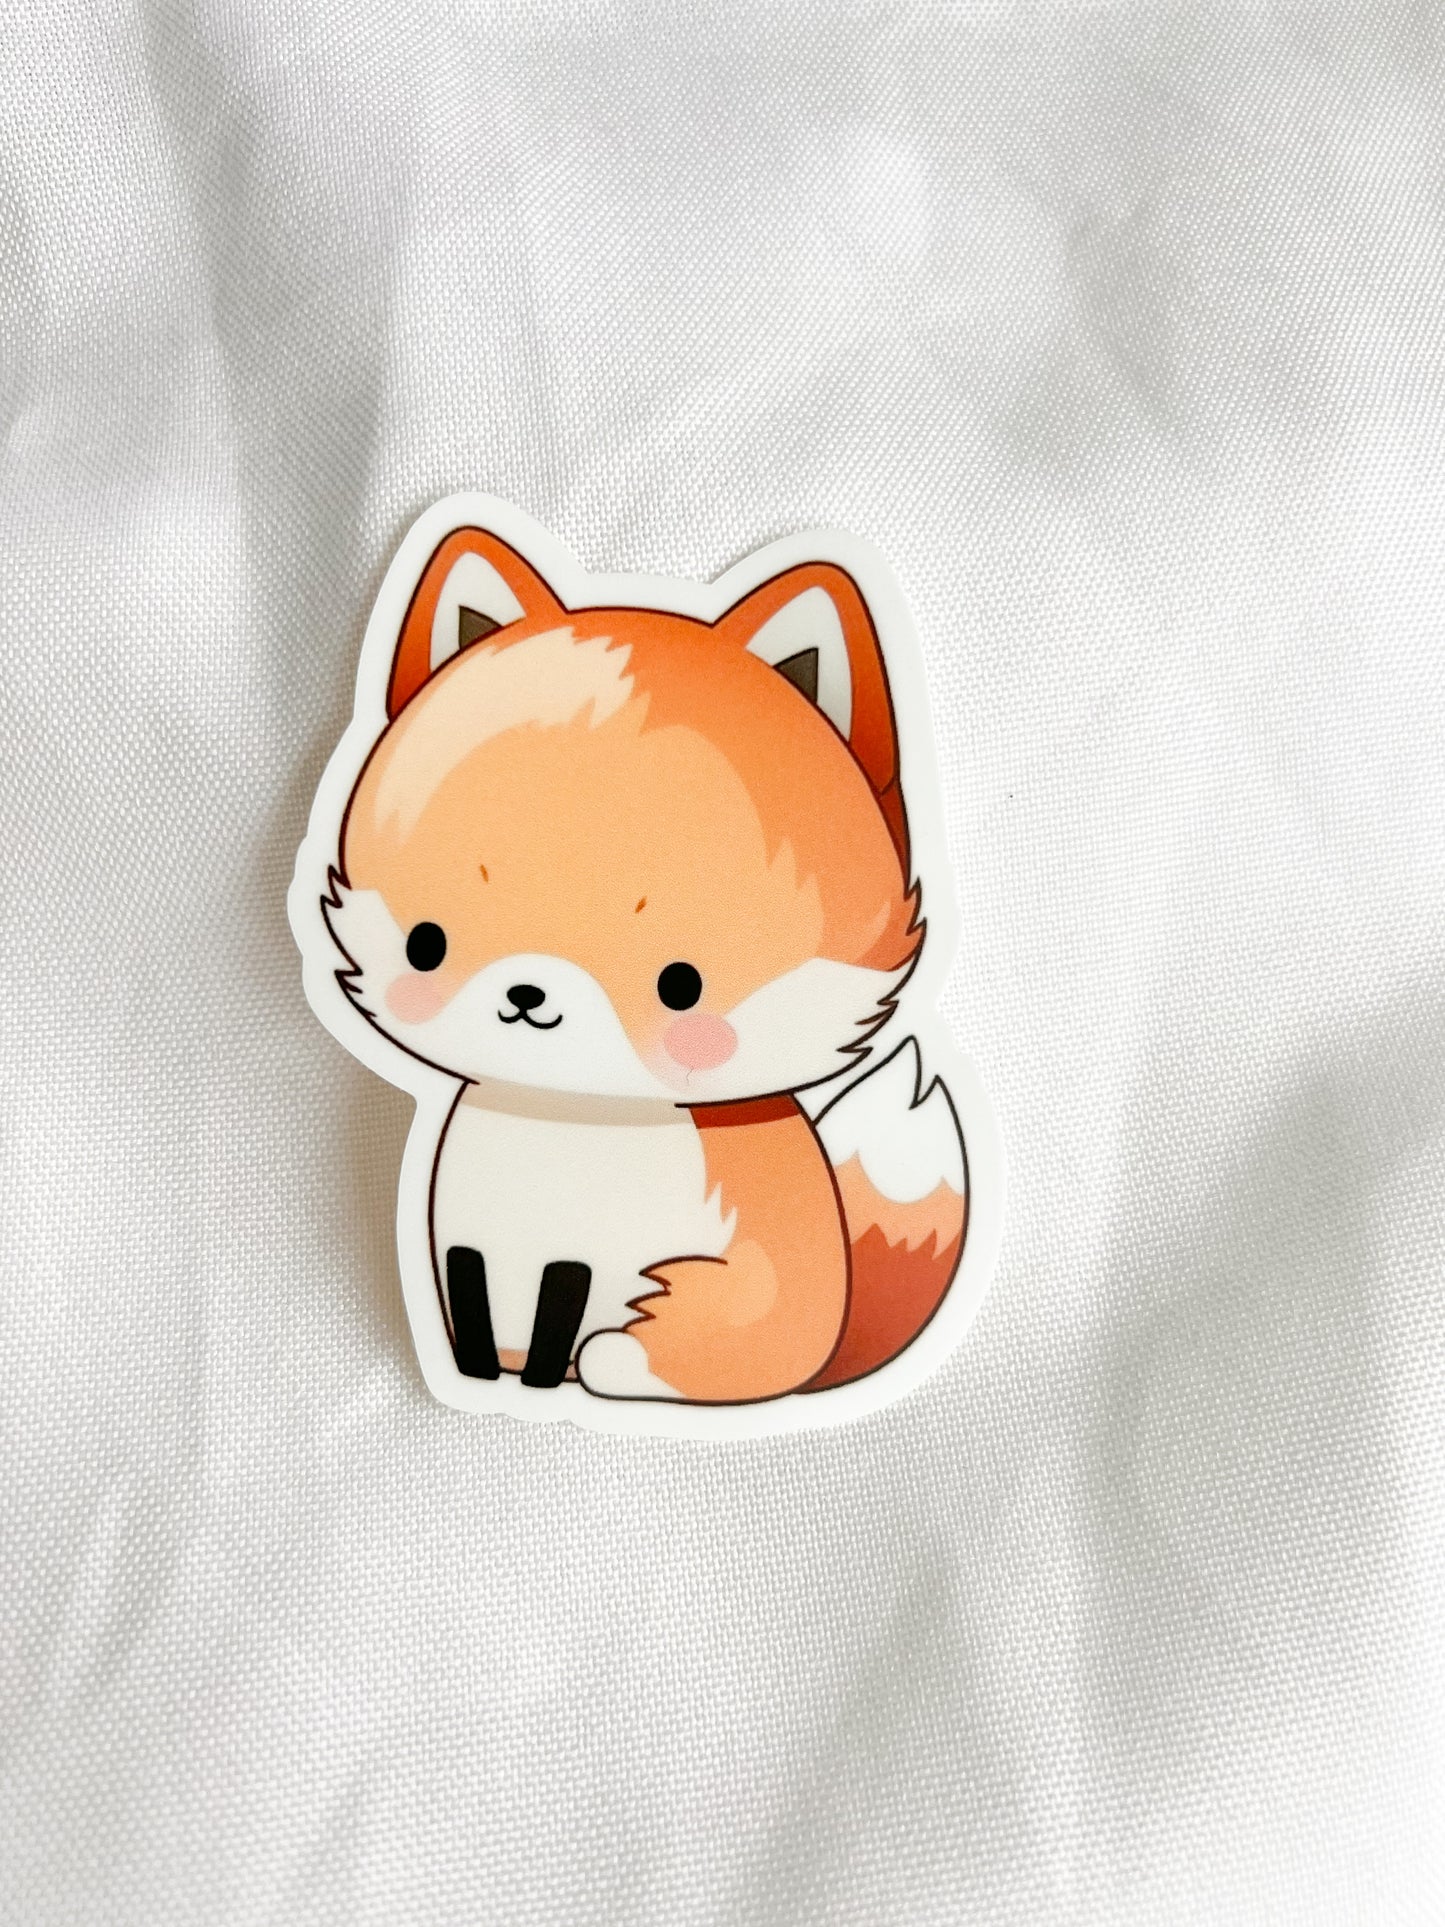 The Fox sticker